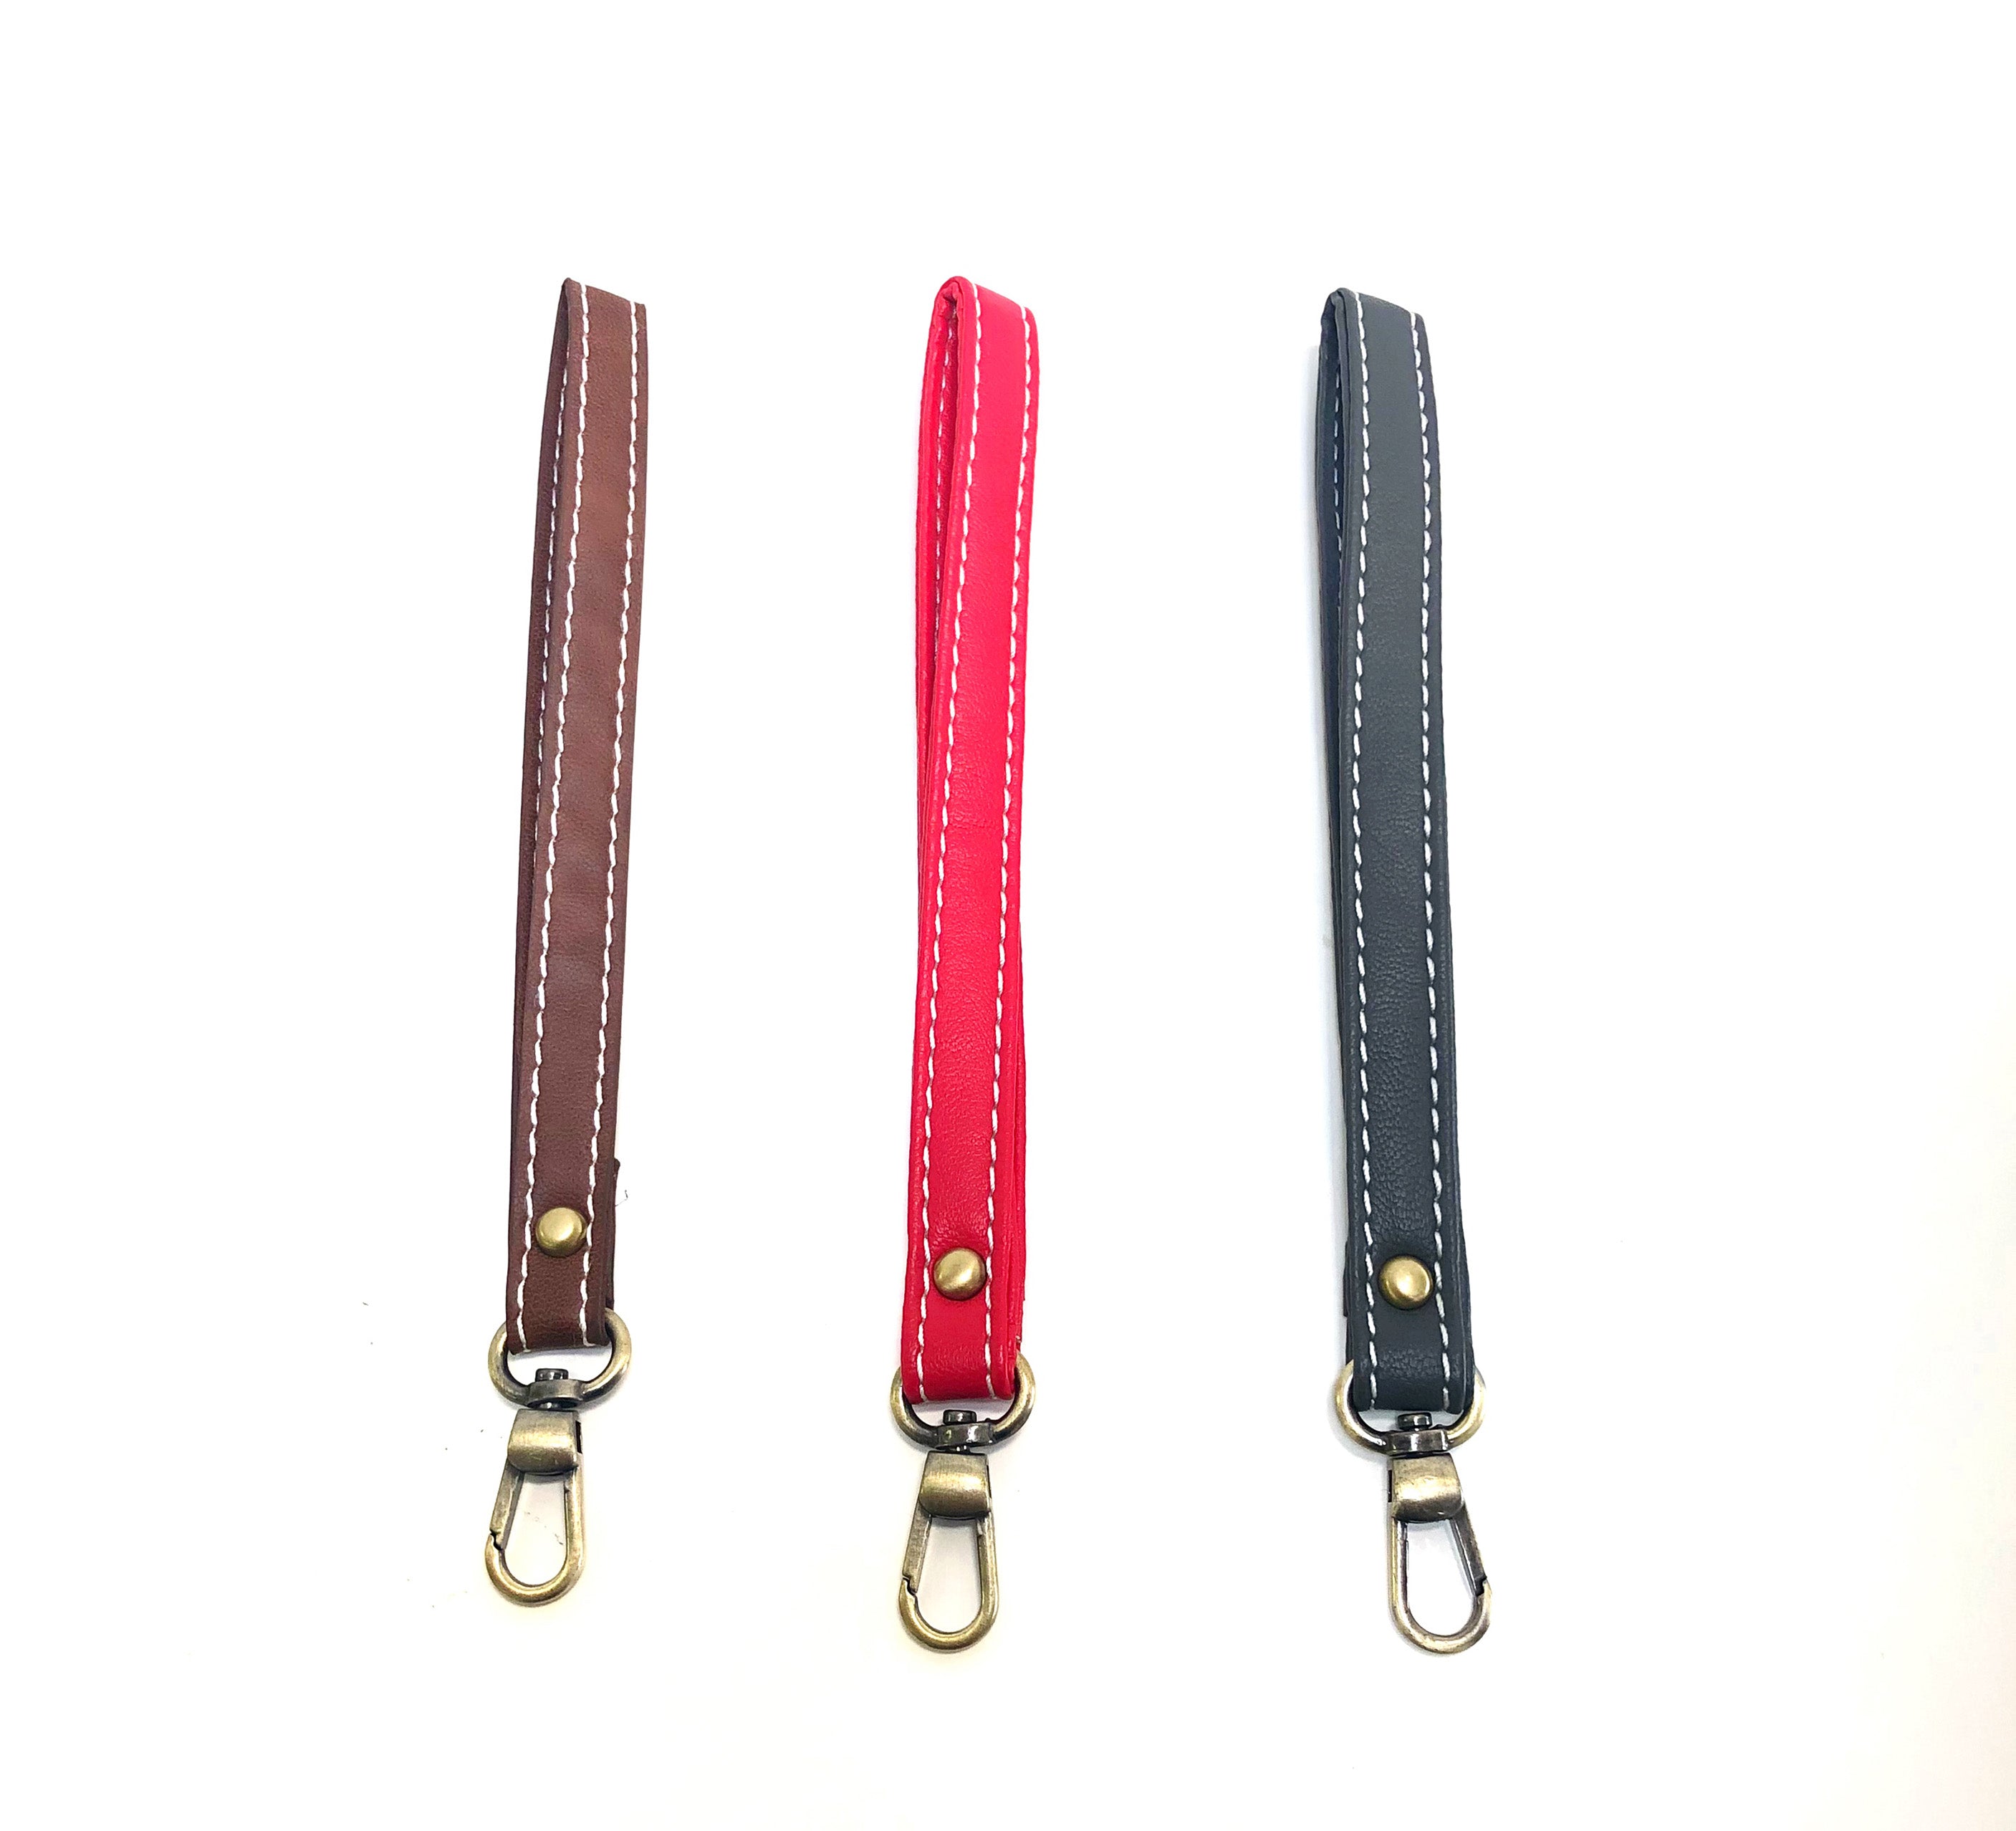 Genuine Leather Replacement Belt Crossbody Strap Purse Handles